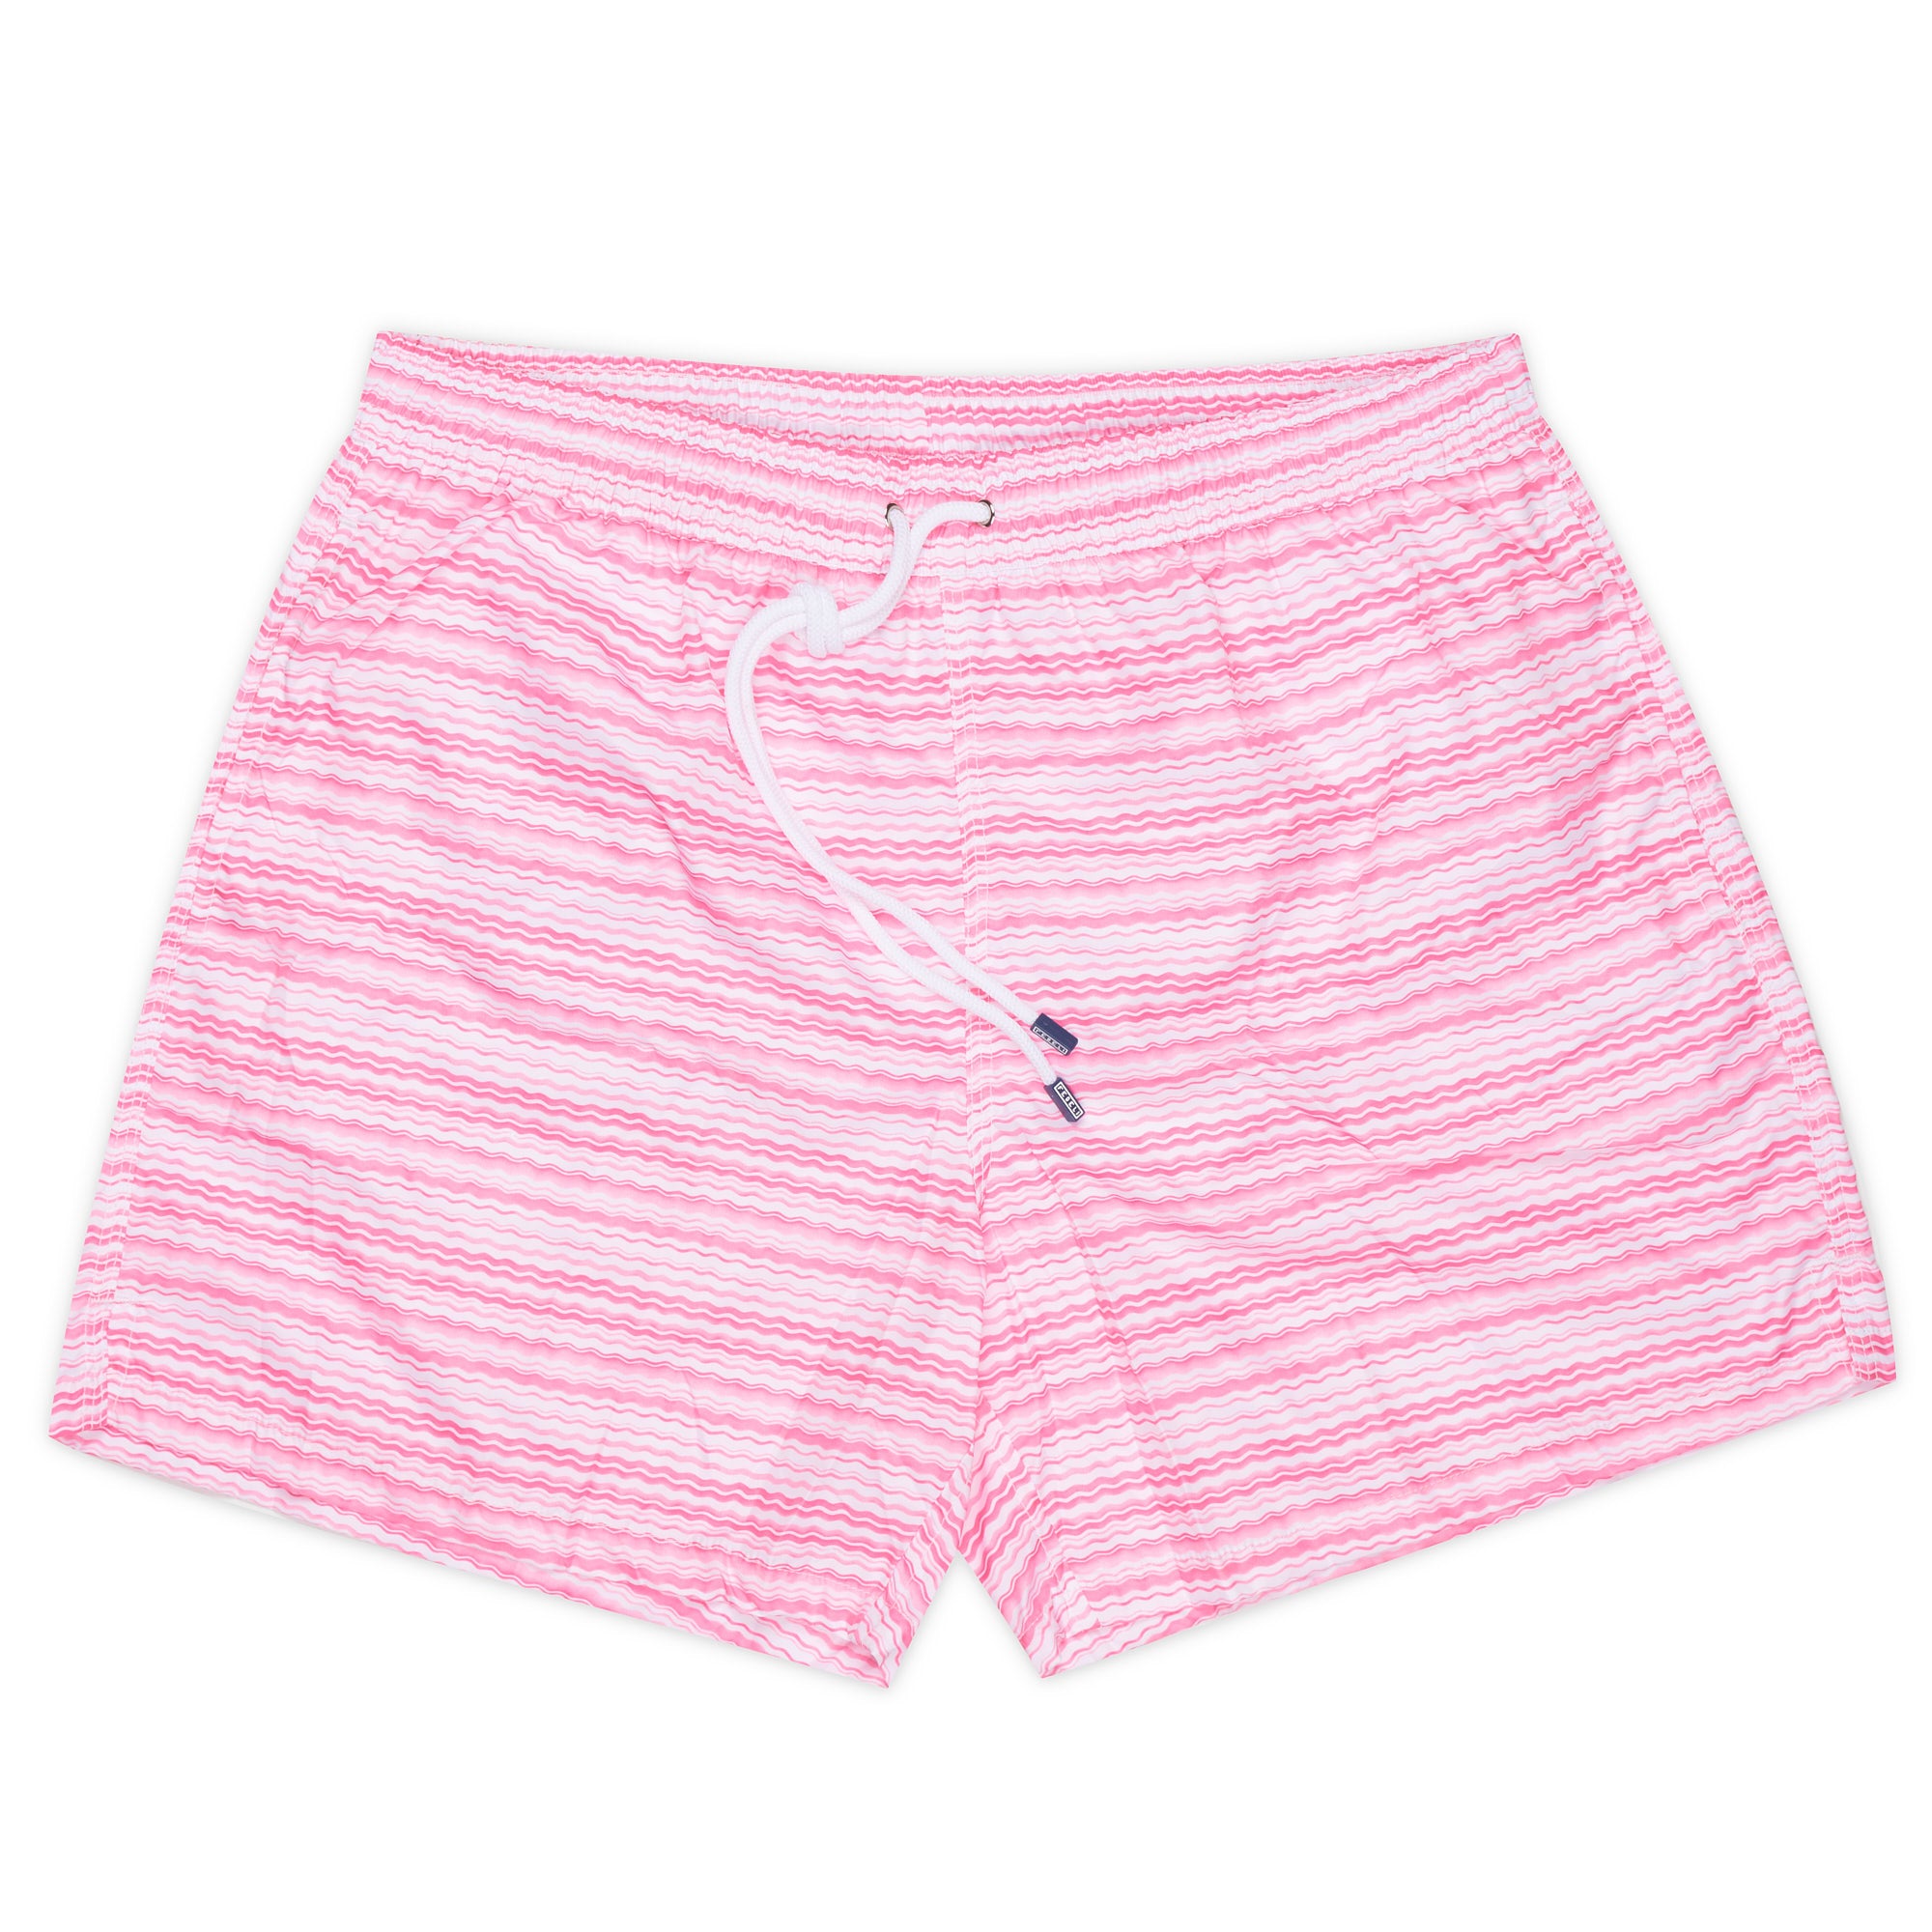 FEDELI Pink-White Wavy Striped Madeira Airstop Swim Shorts Trunks NEW FEDELI